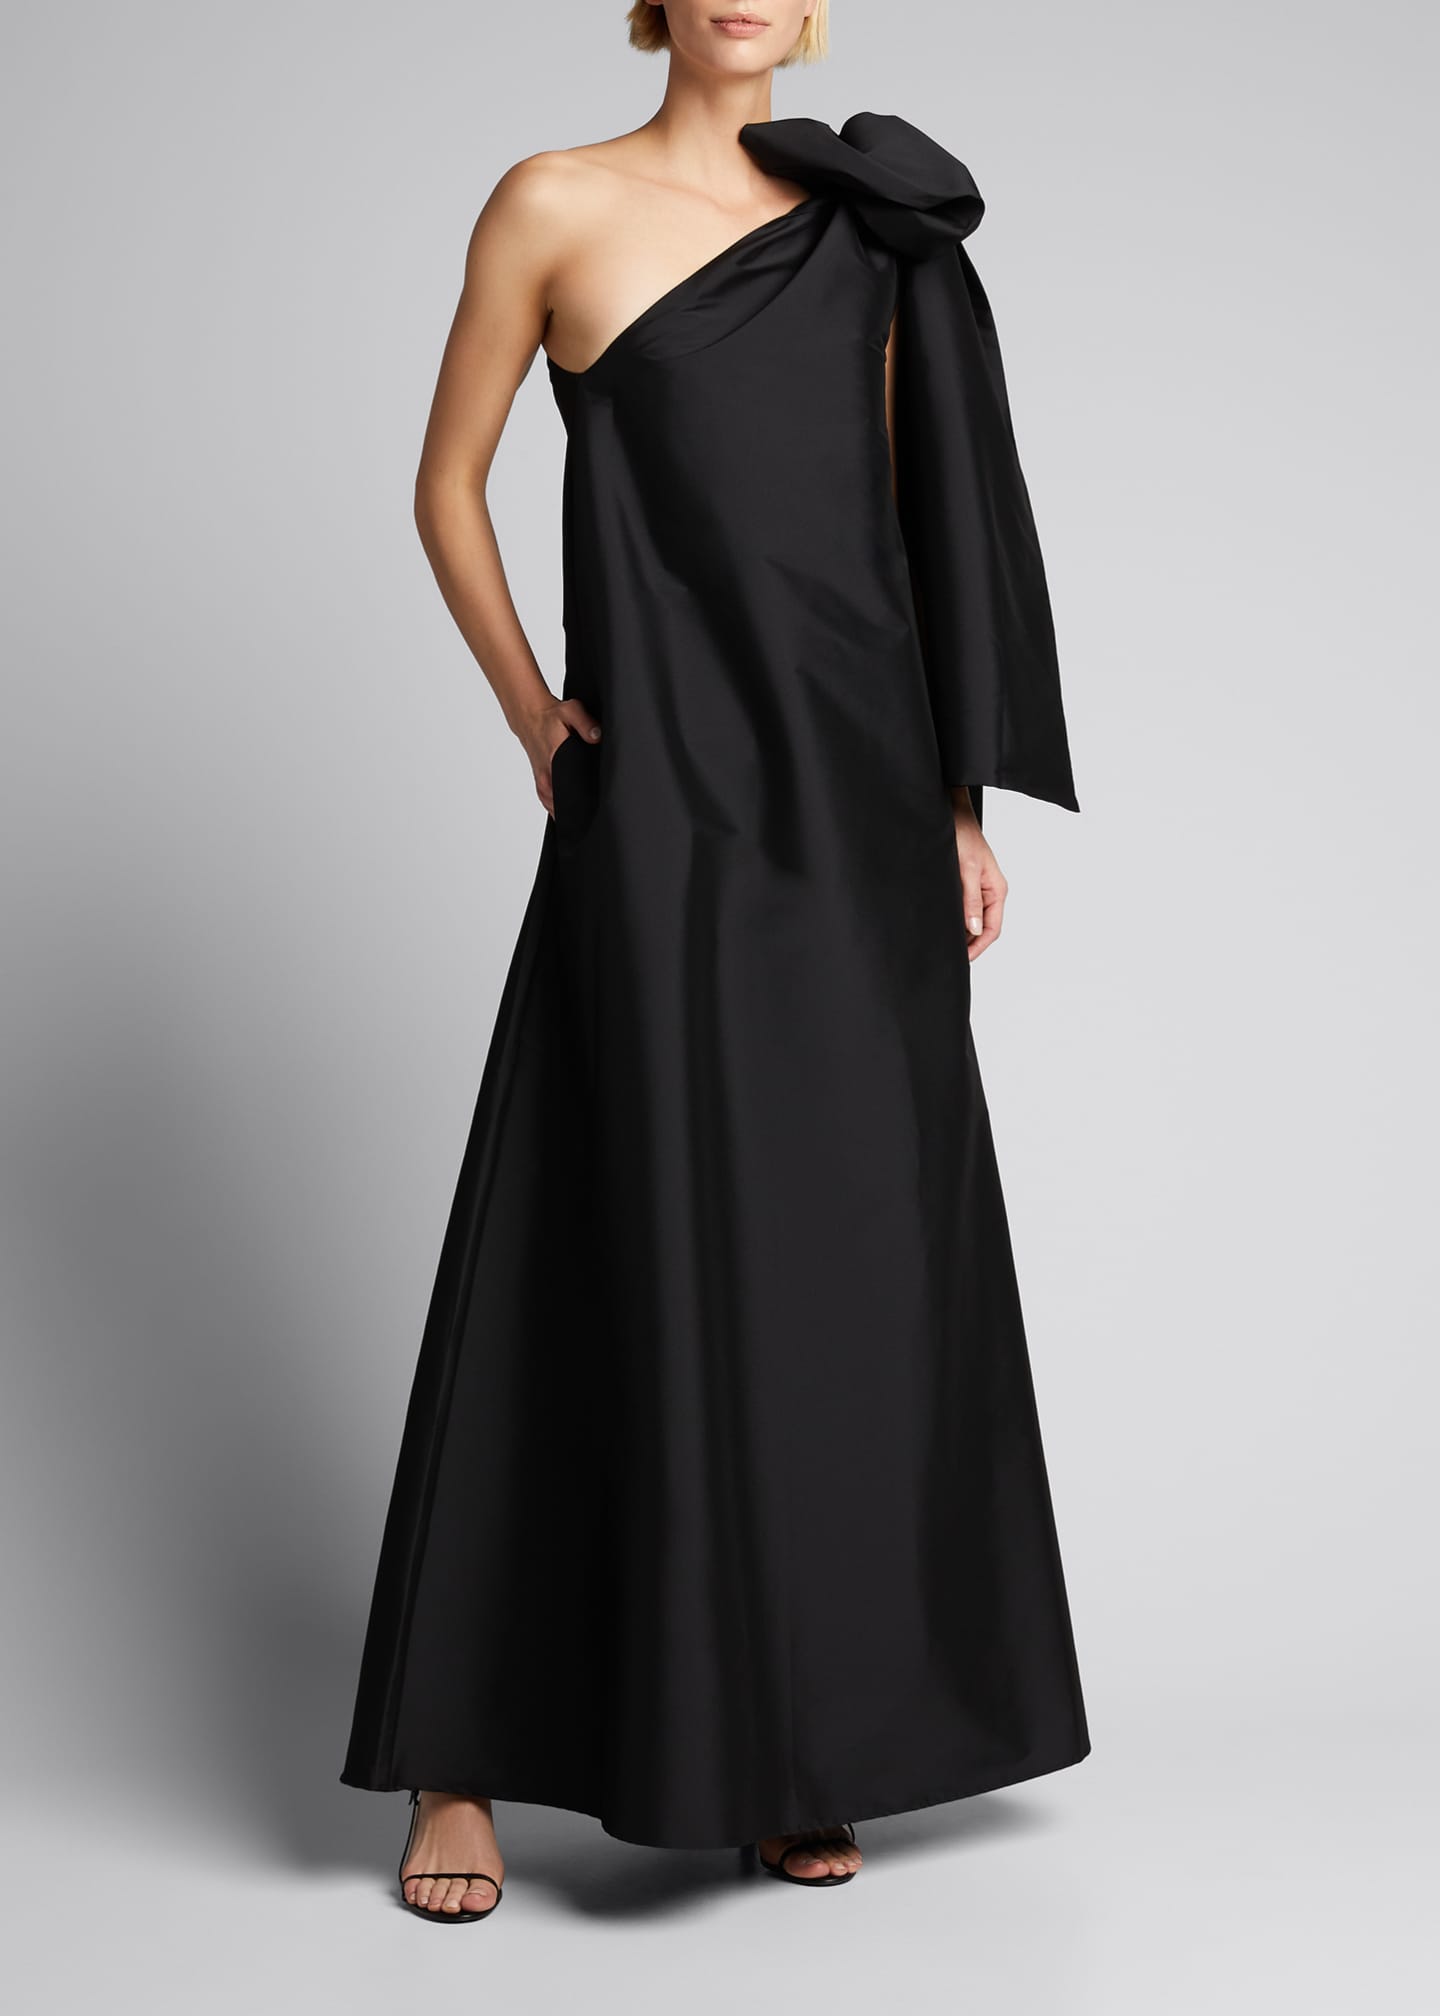 BERNADETTE Winnie Oversized One-Shoulder Bow Gown - Bergdorf Goodman